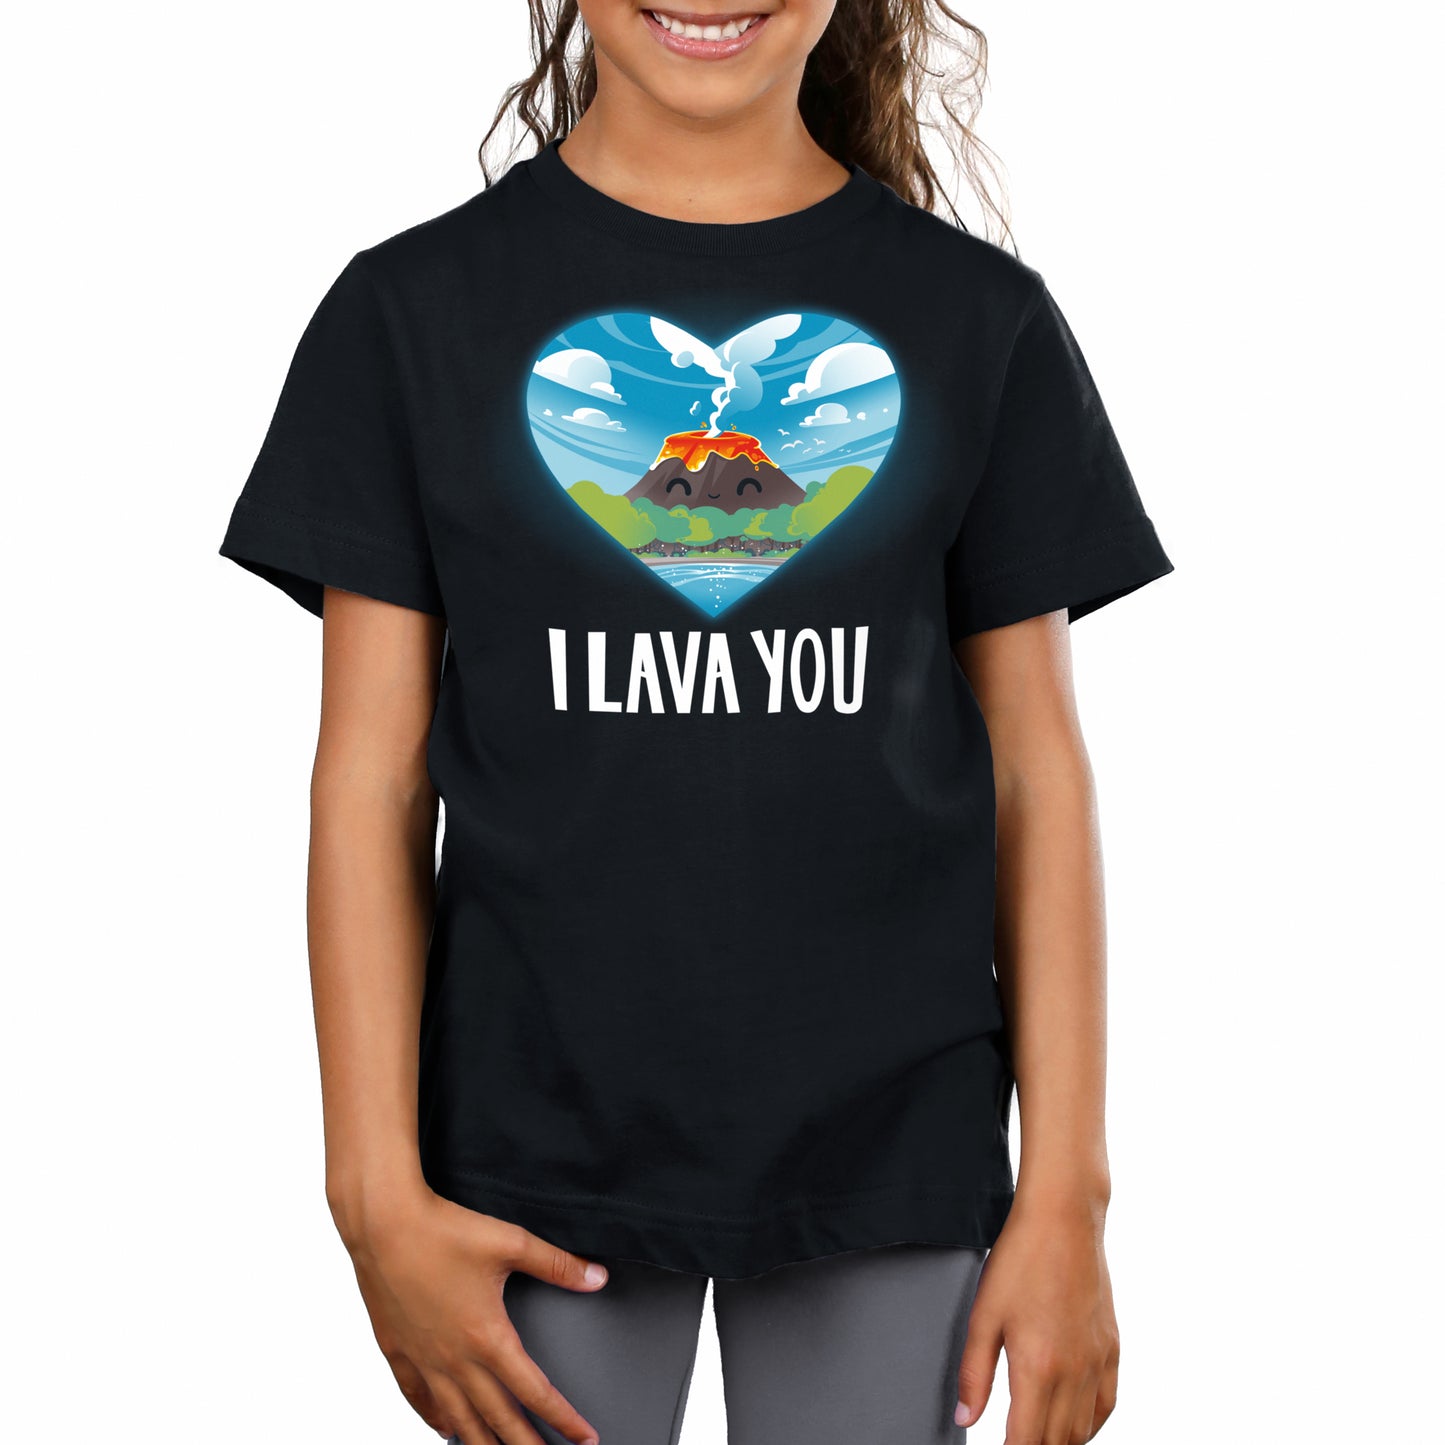 A girl wearing a TeeTurtle original black t-shirt that says "I Lava You